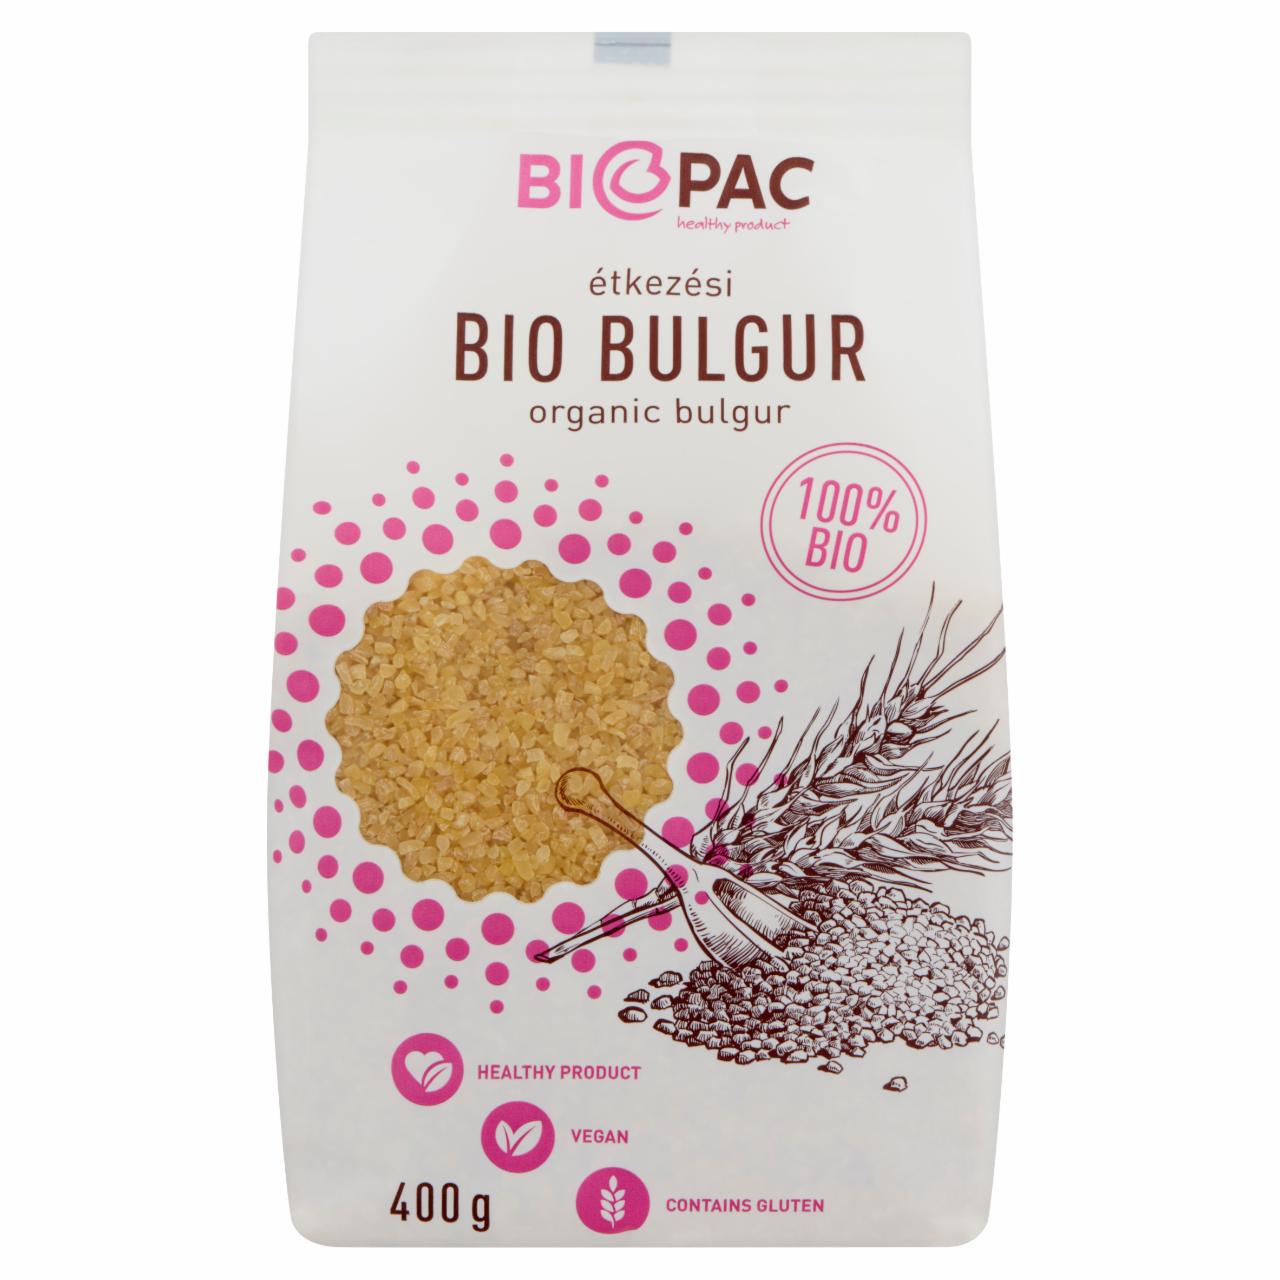 Képek - Biopac BIO bulgur 400 g